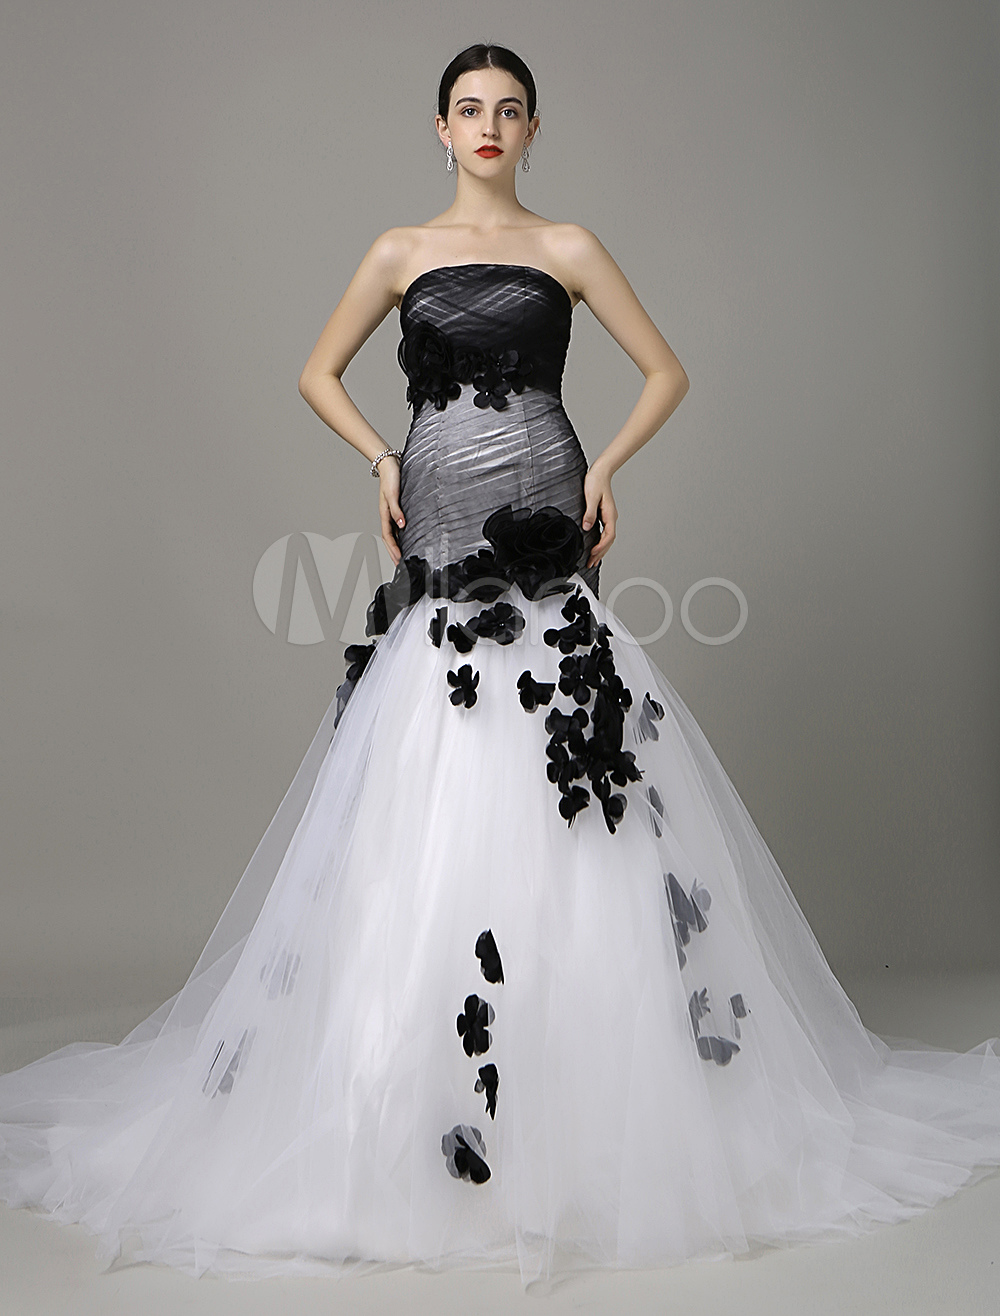 Black Mermaid Wedding Dress Strapless Sweetheart Flower Applique Tulle Chaple Train Bridal Gown Milanoo photo